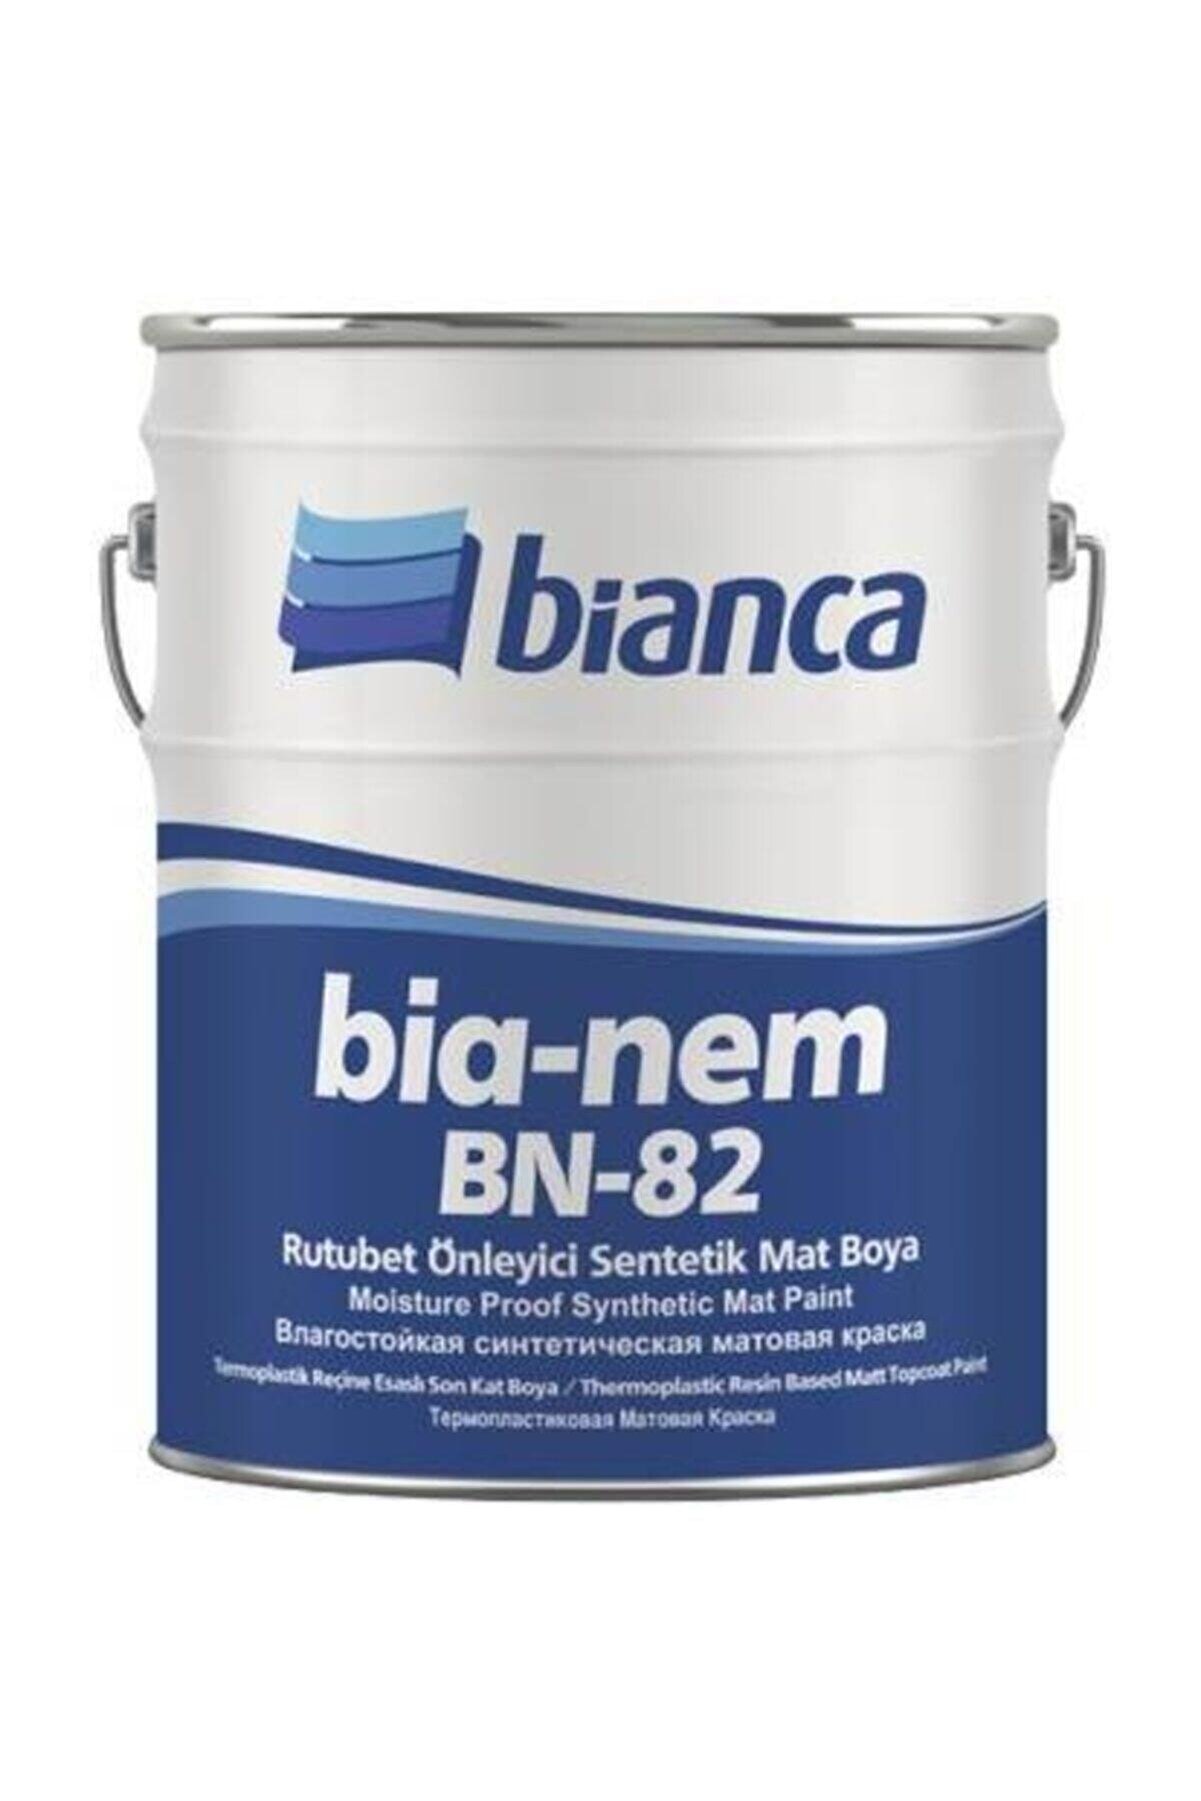 Bianca Bia-nem (Nem Önleyici) 0,75lt